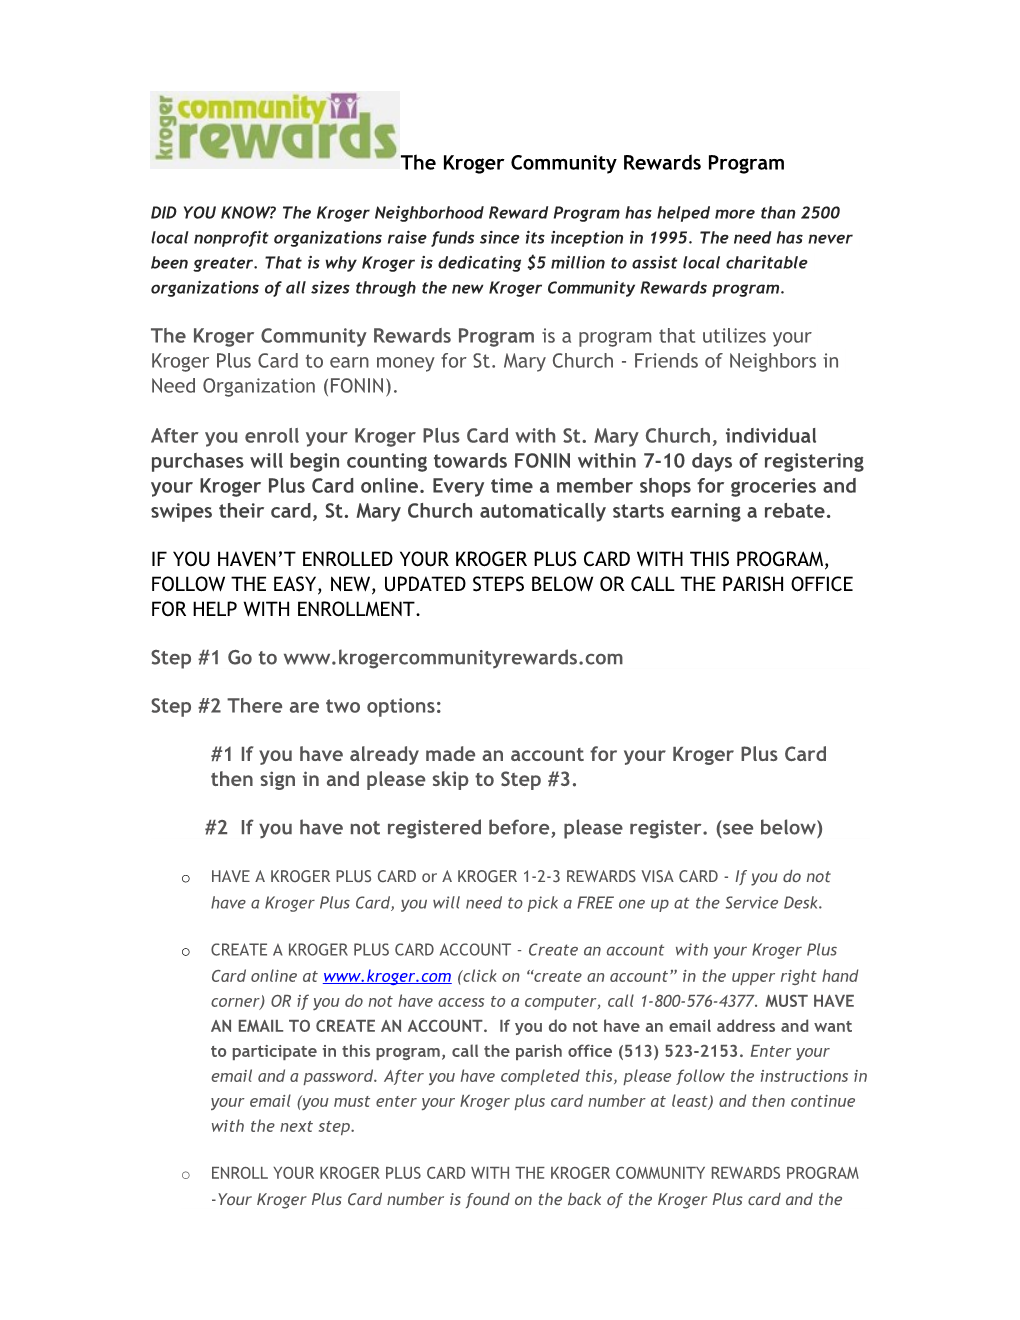 Kroger Community Rewards Program New for 2012